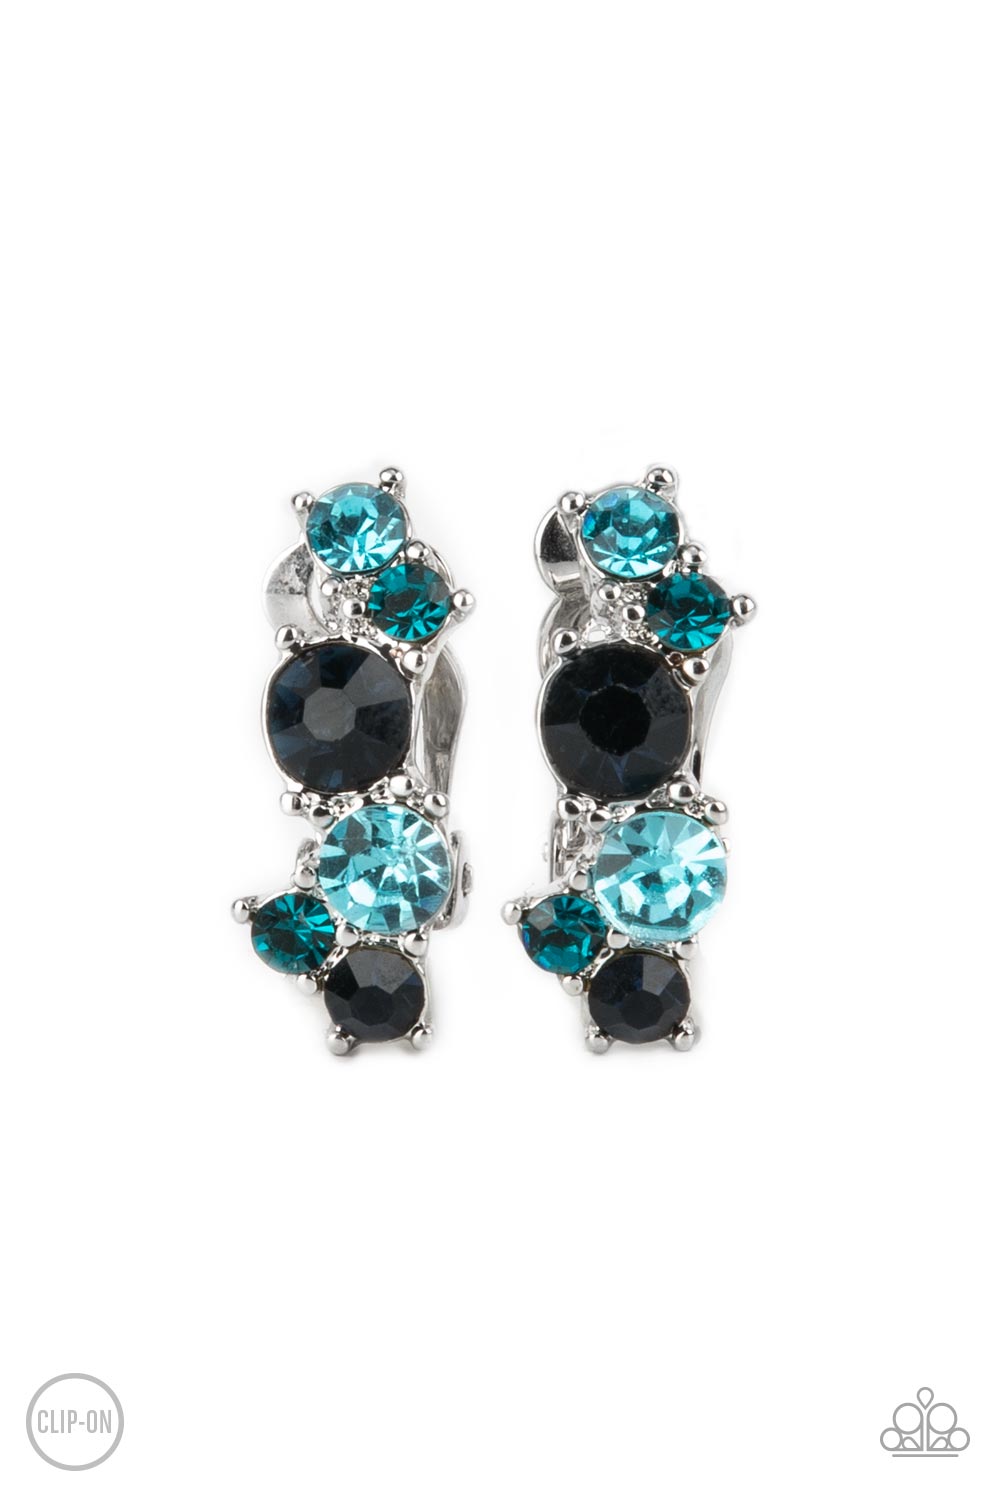 Cosmic Celebration Blue Rhinestone Clip-on Earrings - Paparazzi Accessories- lightbox - CarasShop.com - $5 Jewelry by Cara Jewels